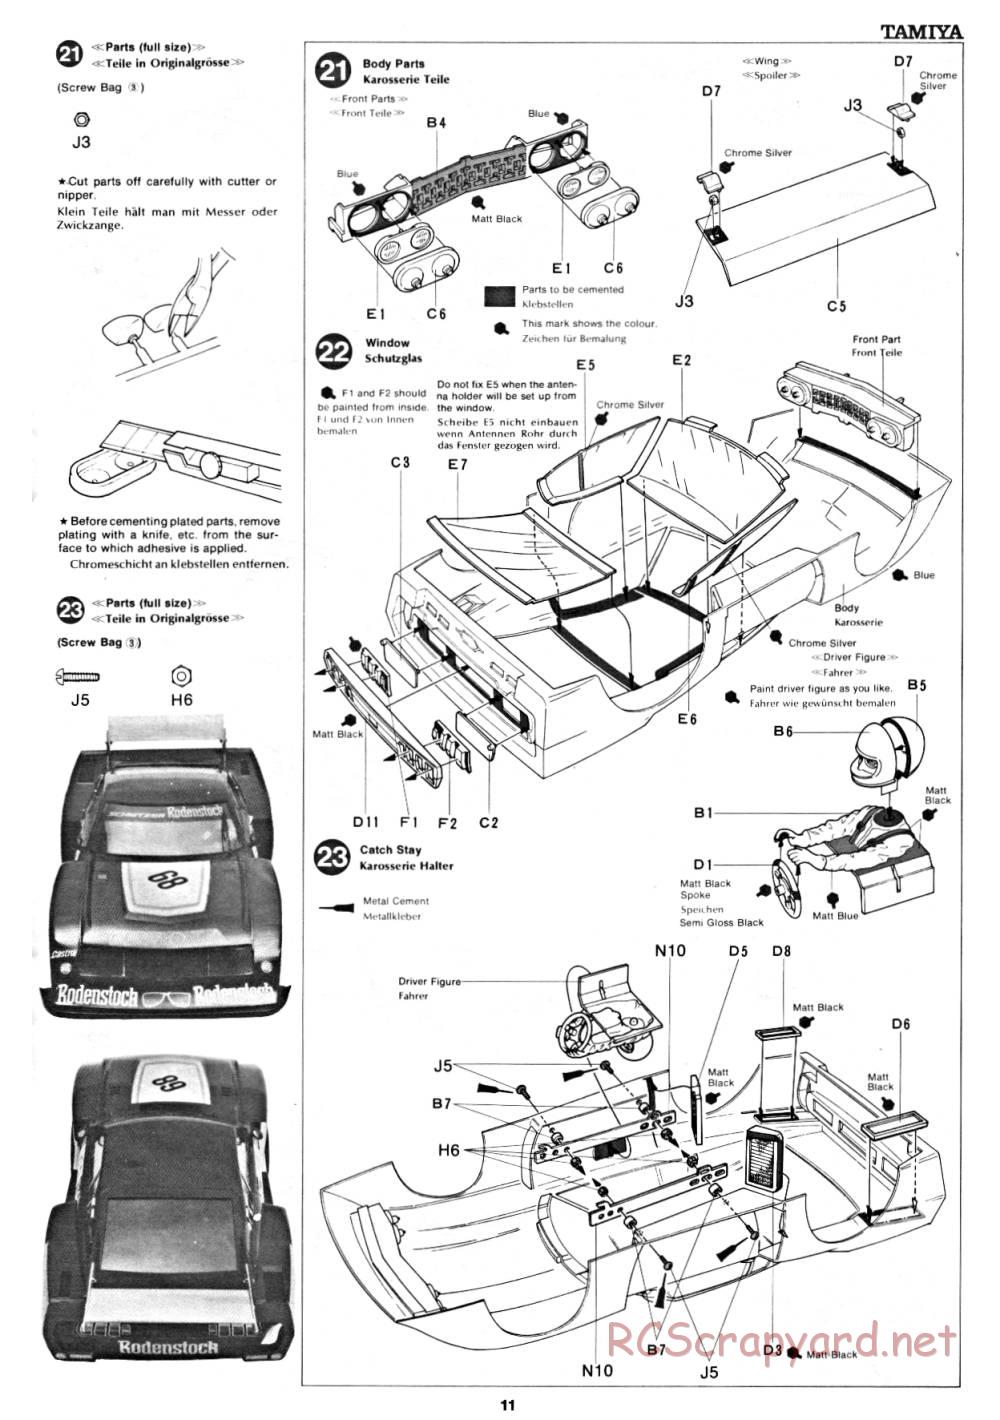 Tamiya - Toyota Celica LB Turbo Gr.5 (CS) - 58009 - Manual - Page 11